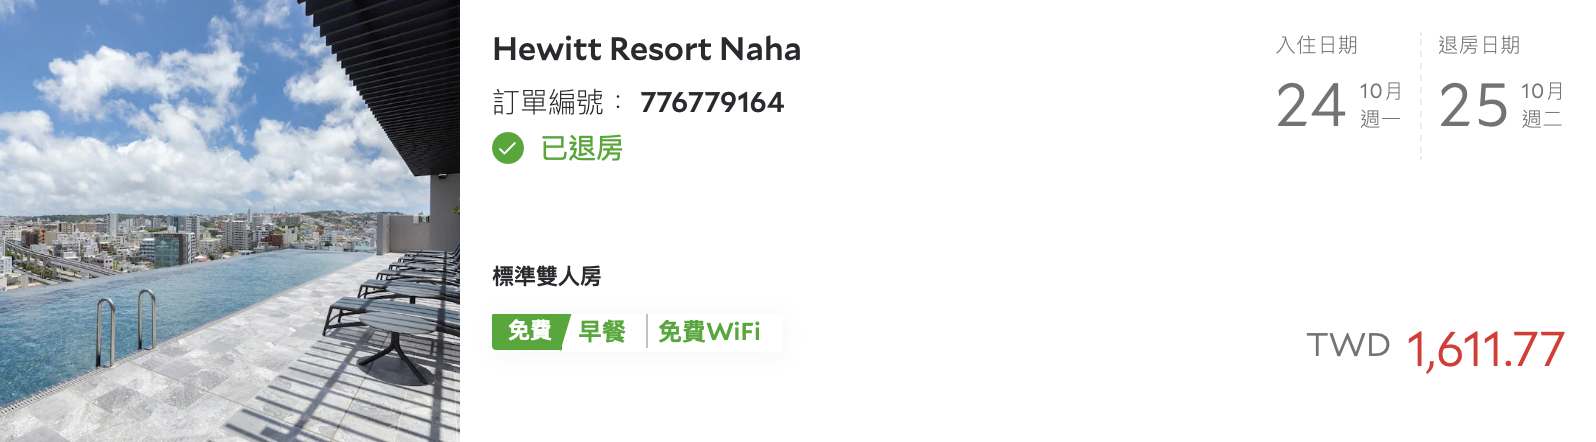 Hweitt-Resort-Naha-休伊特-度假村-沖繩-那霸-安里-住宿-無邊際-泳池-五星-市區-飯店-推薦